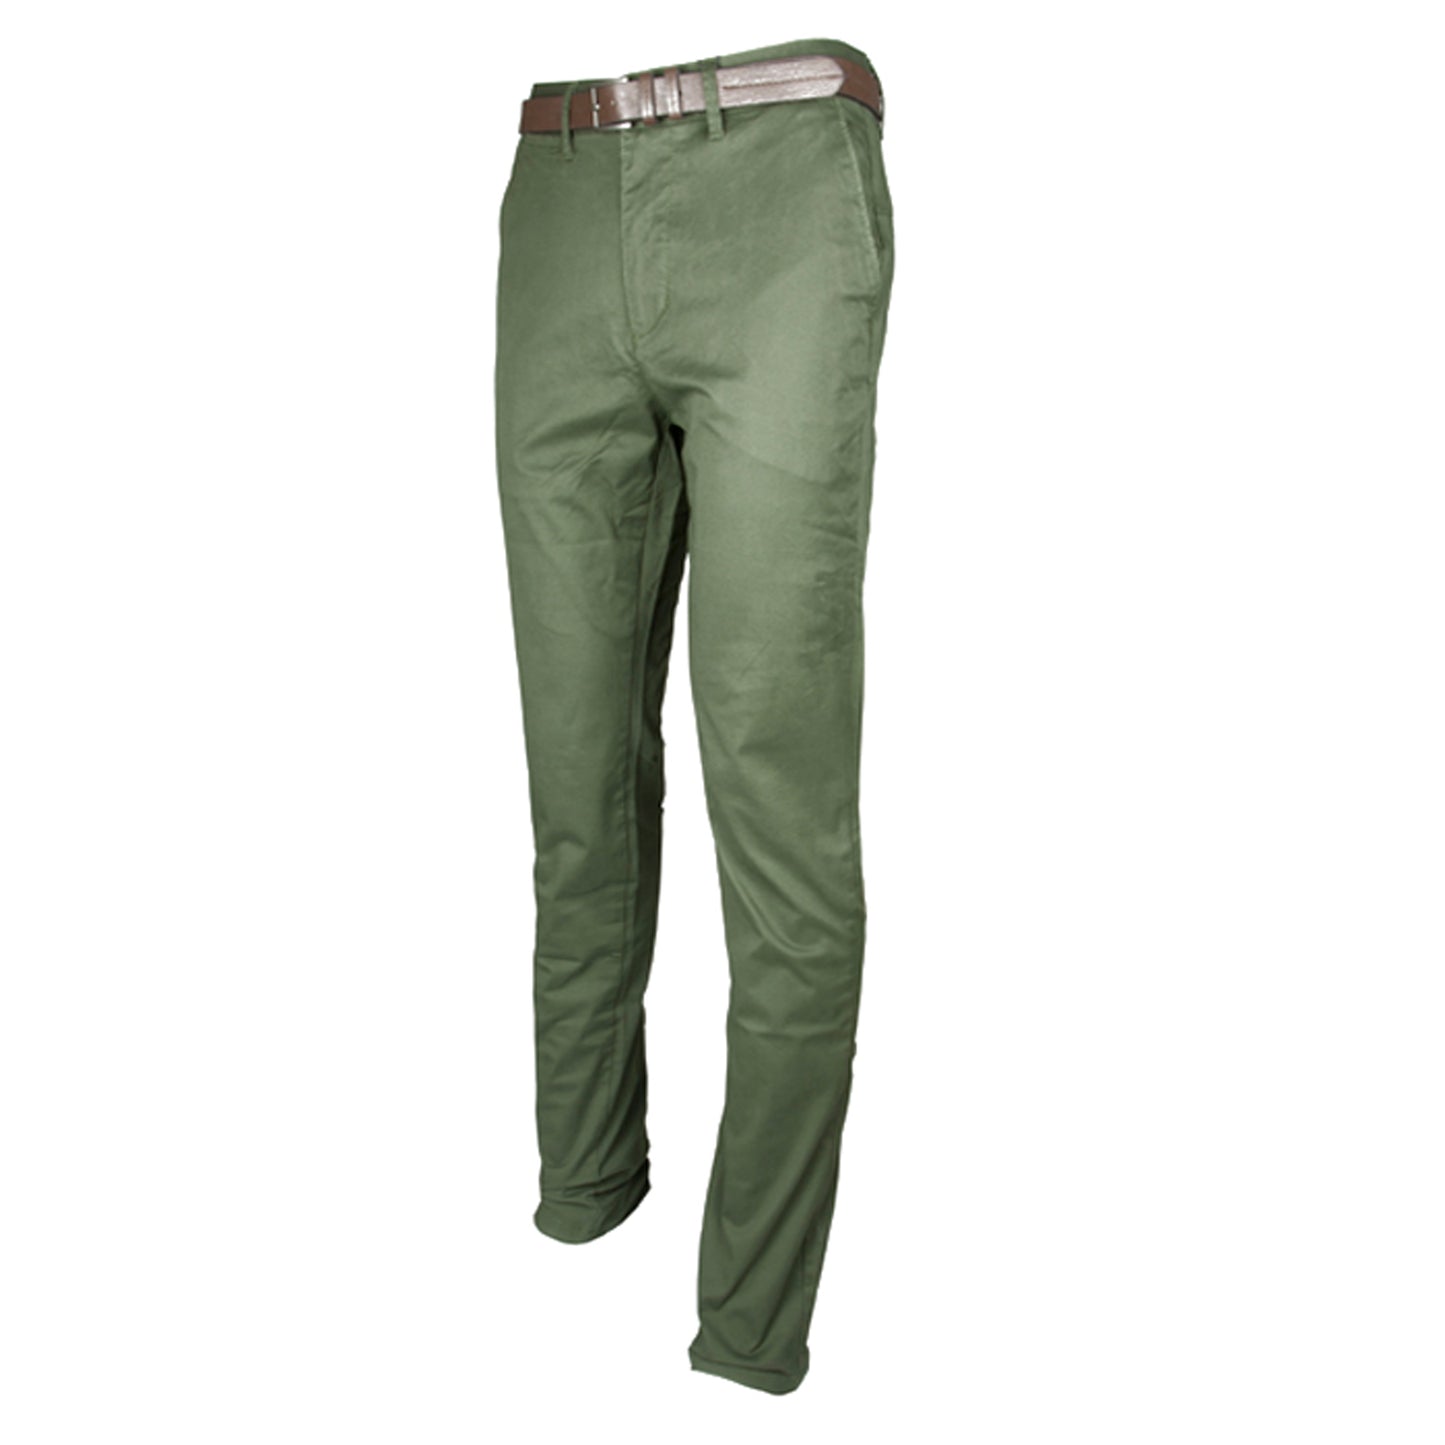 Semi Pants - Slim Fit Chino Green CHARLIE 001 GREEN